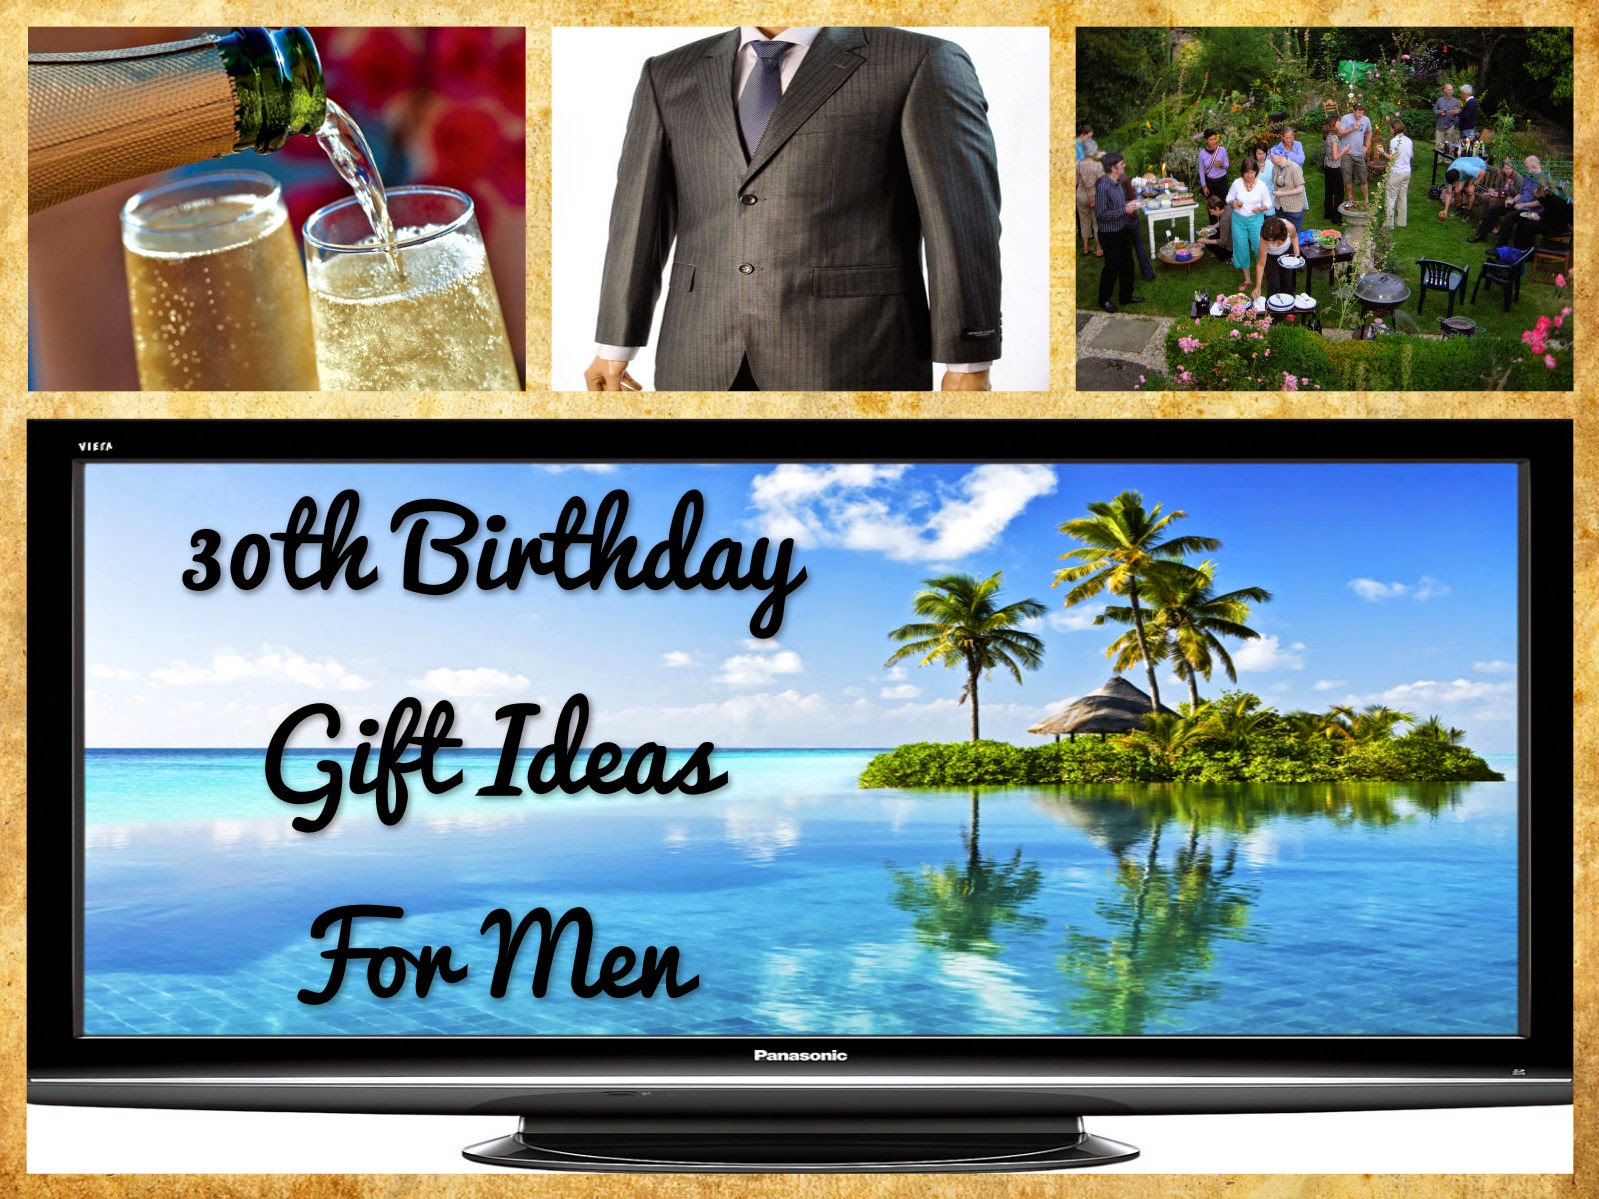 Birthday Present Ideas: 30th Birthday Gift Ideas For Men